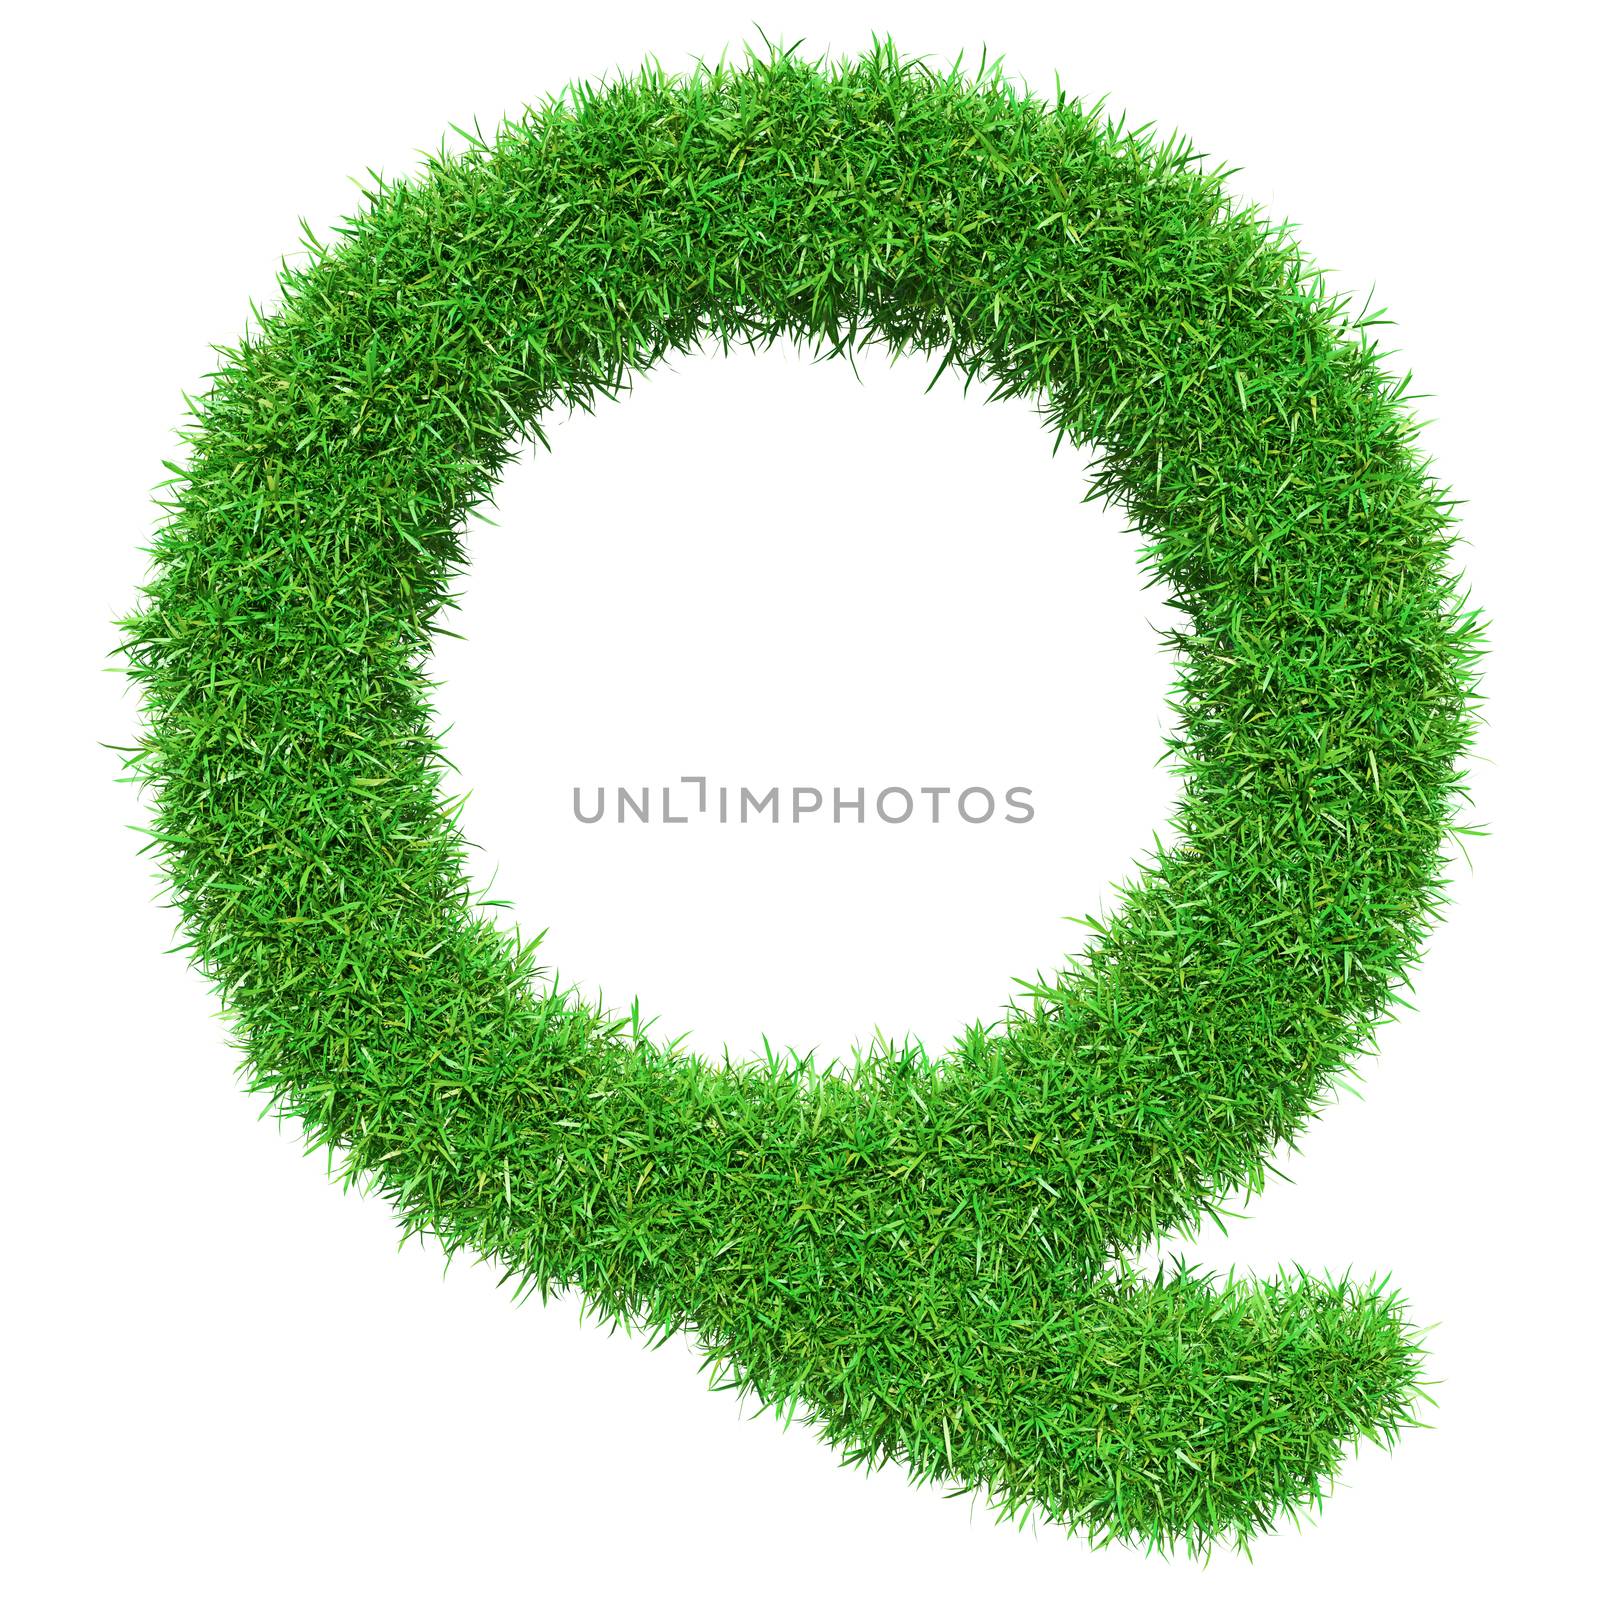 Green Grass Letter Q by cherezoff